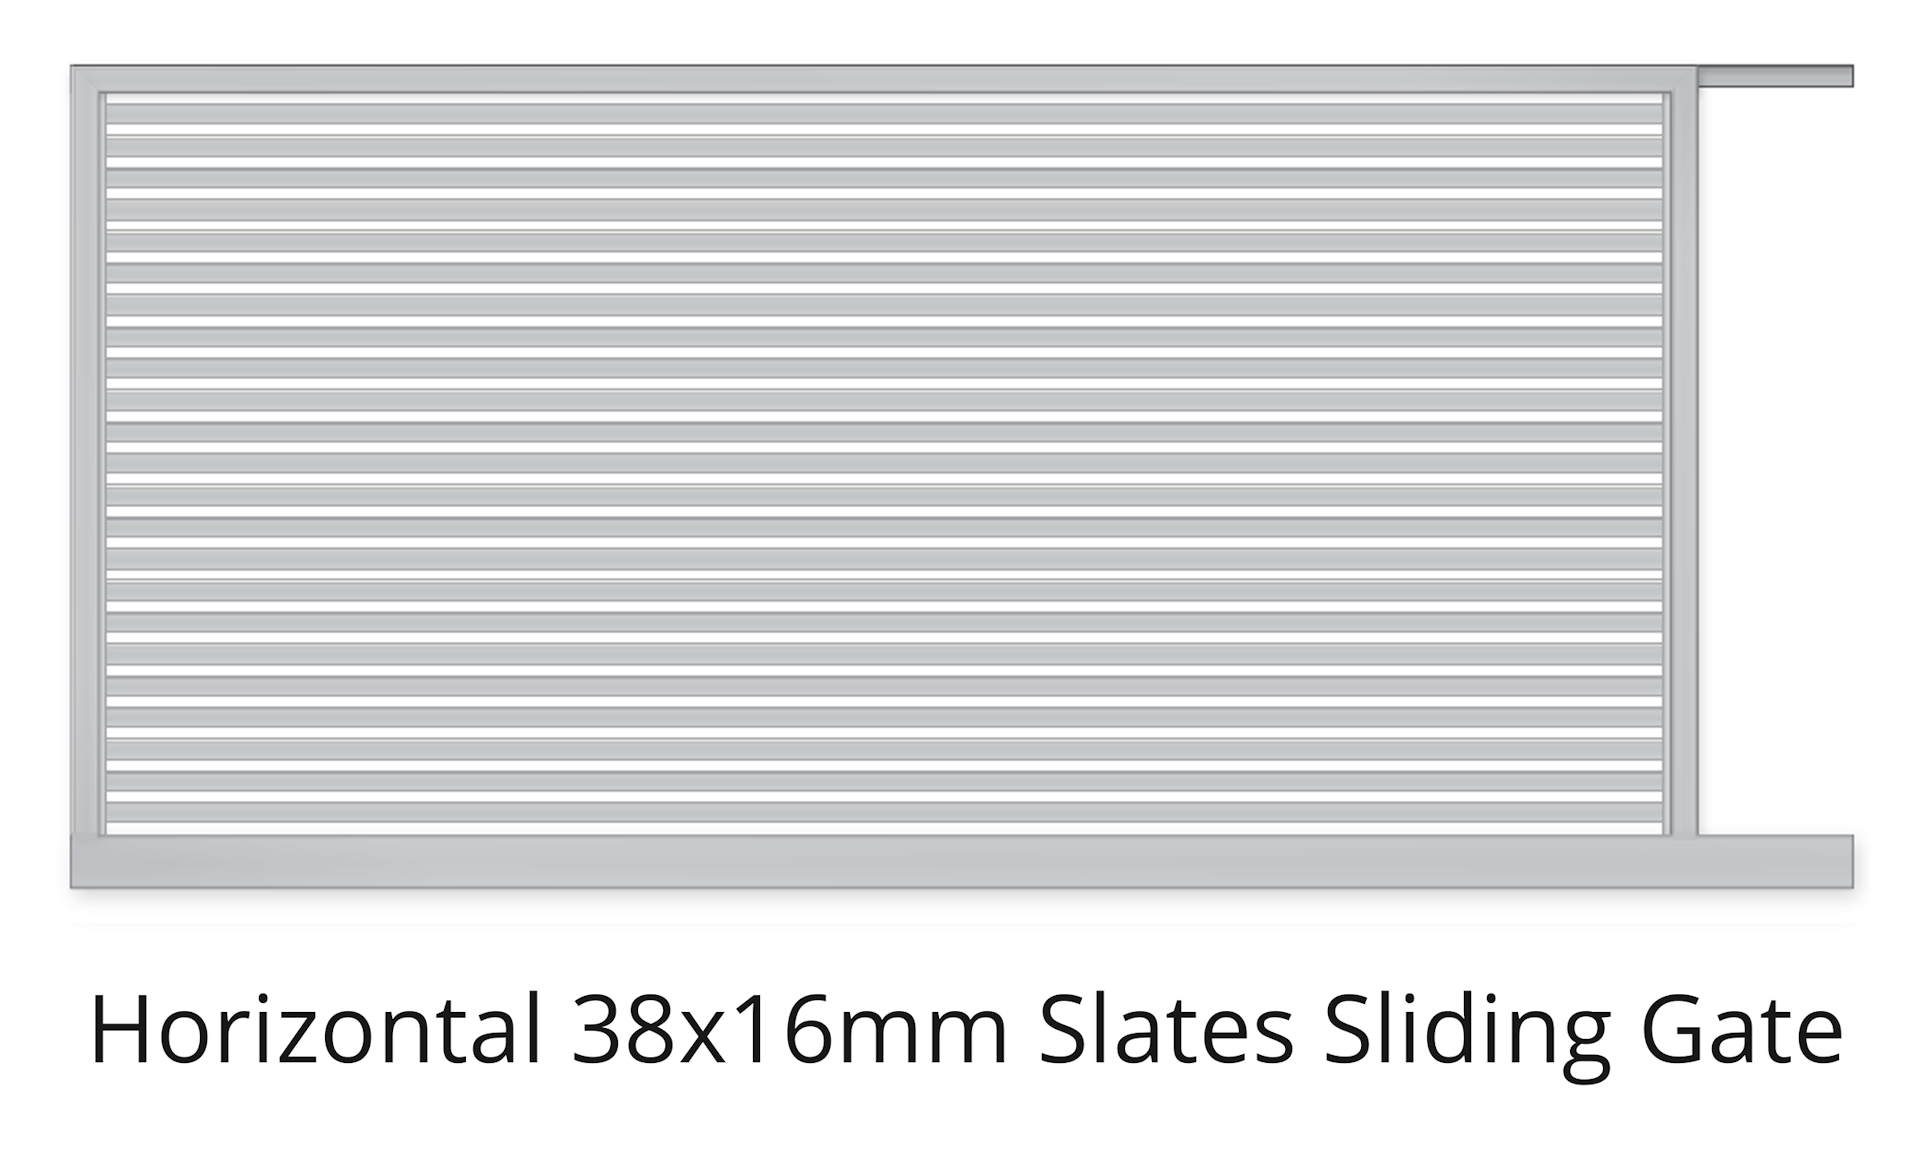 Standard Gate - Style Horizontal 38x16mm Slates Sliding Gate